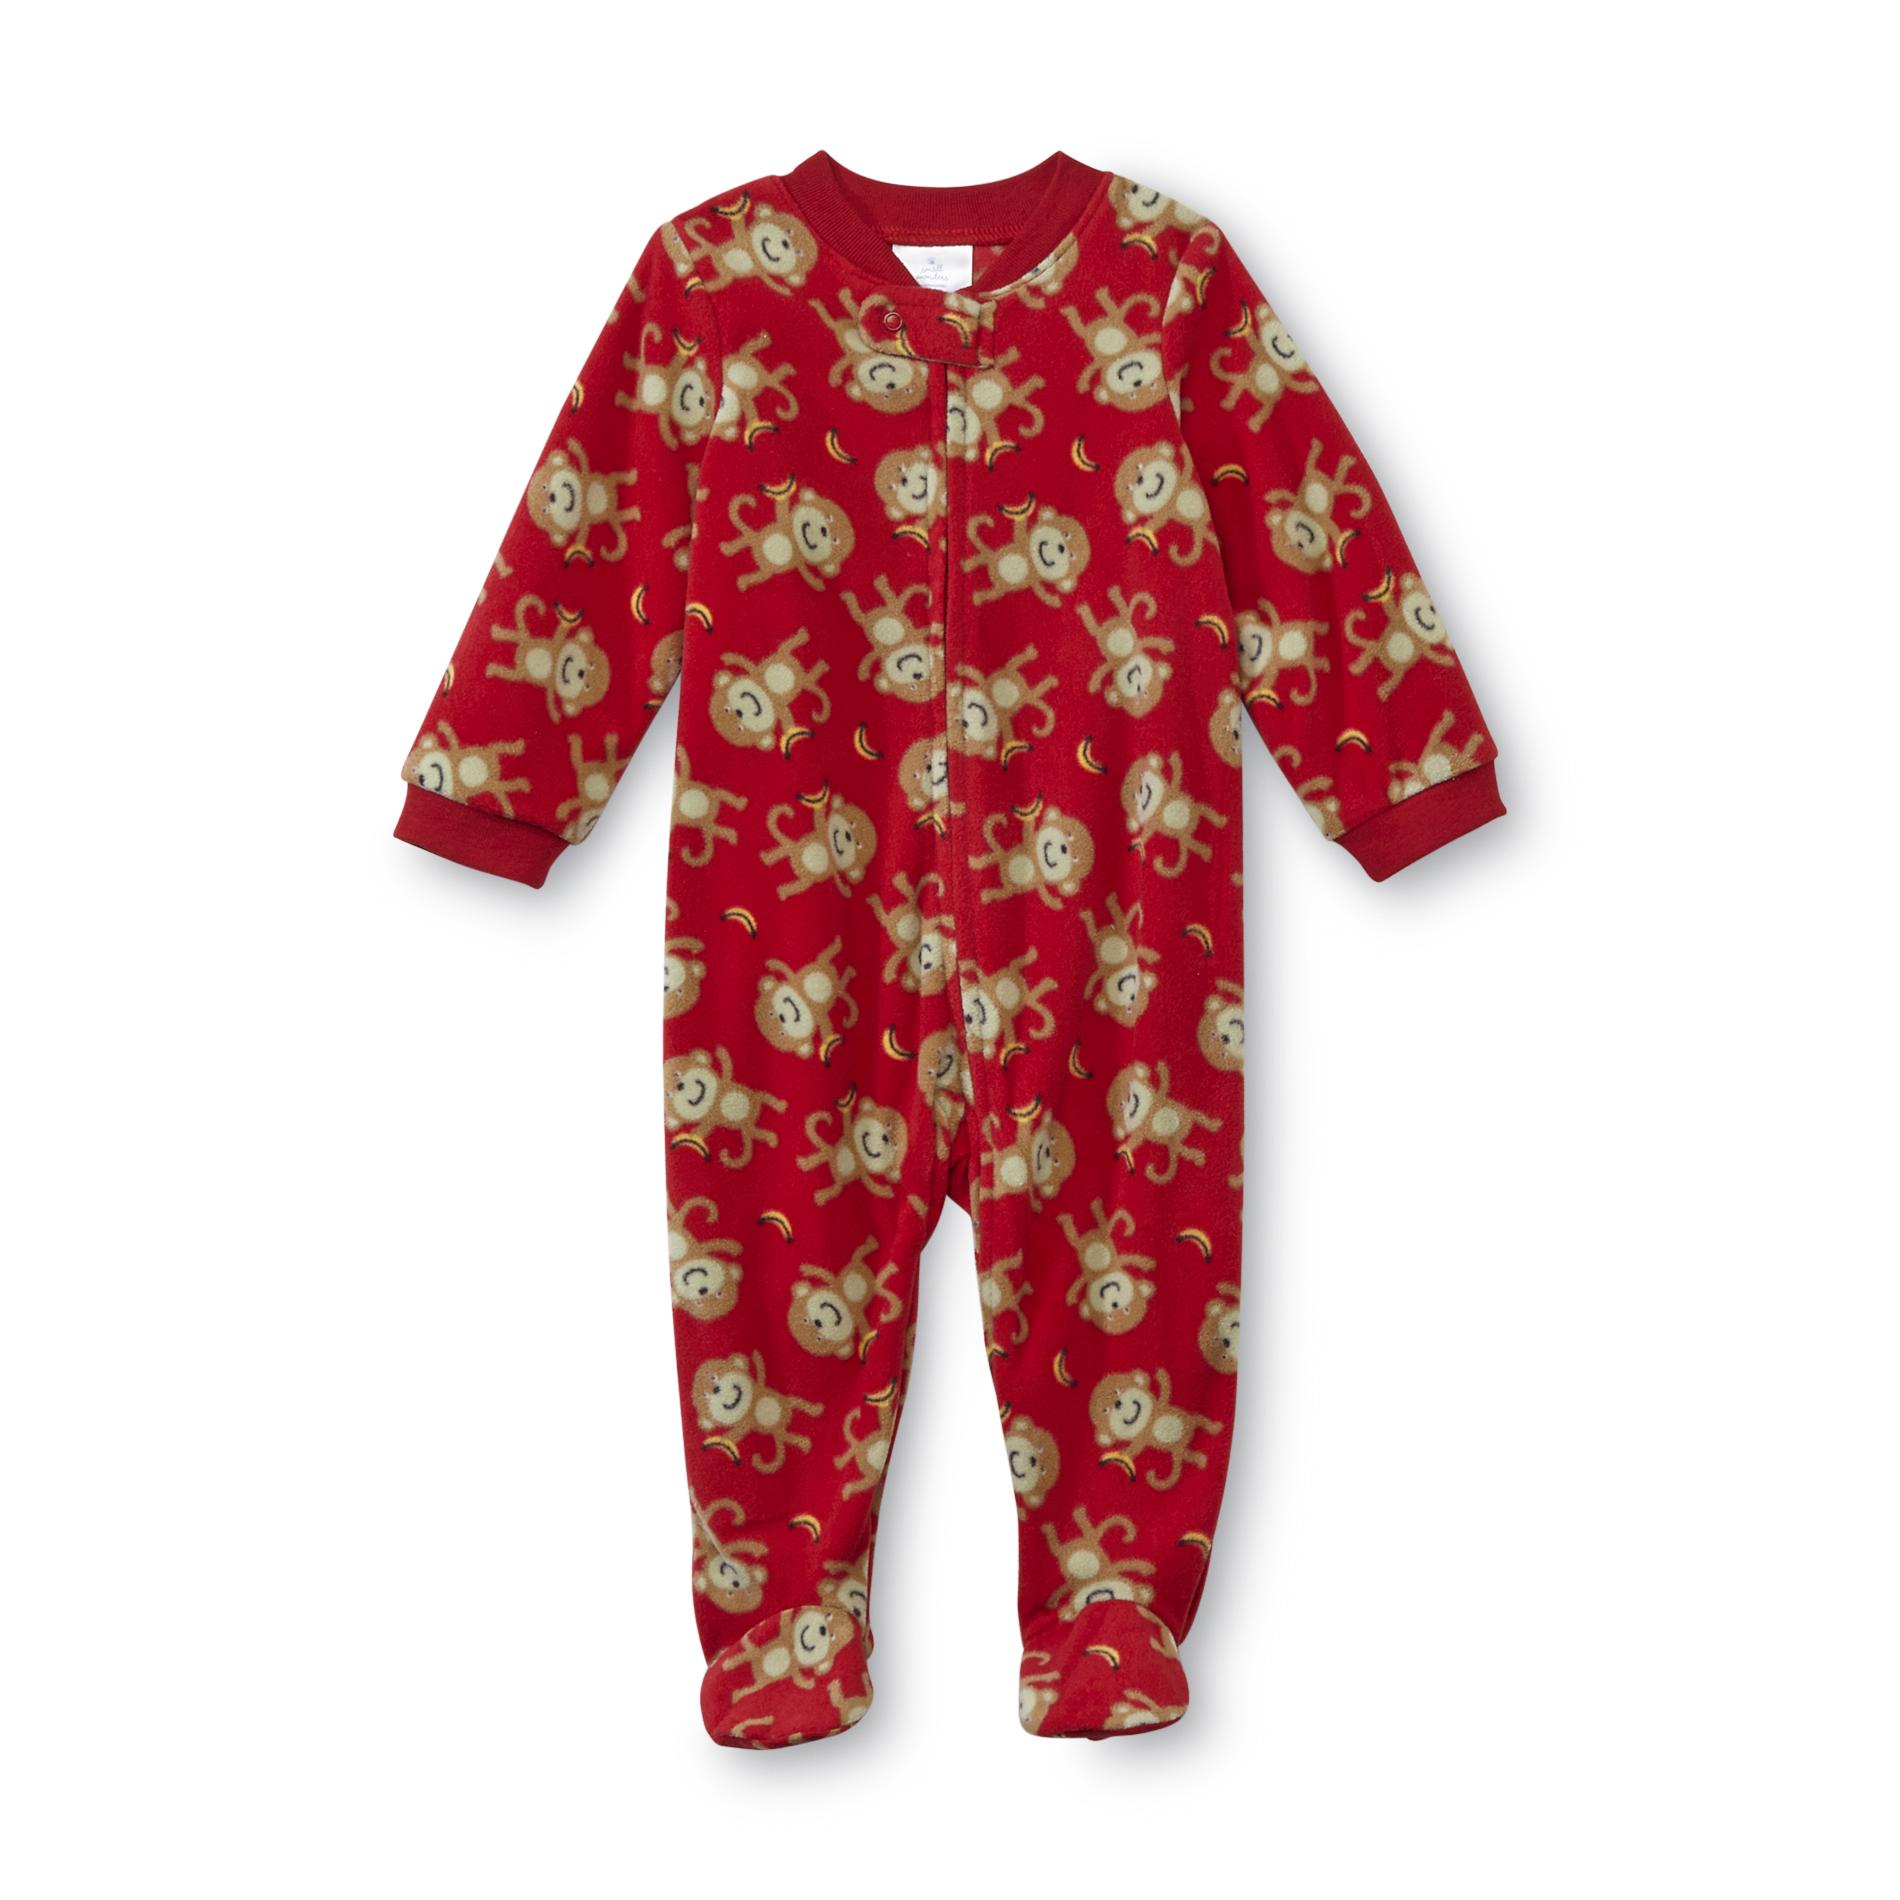 Small Wonders Newborn Boy's Footed Pajamas - Monkey